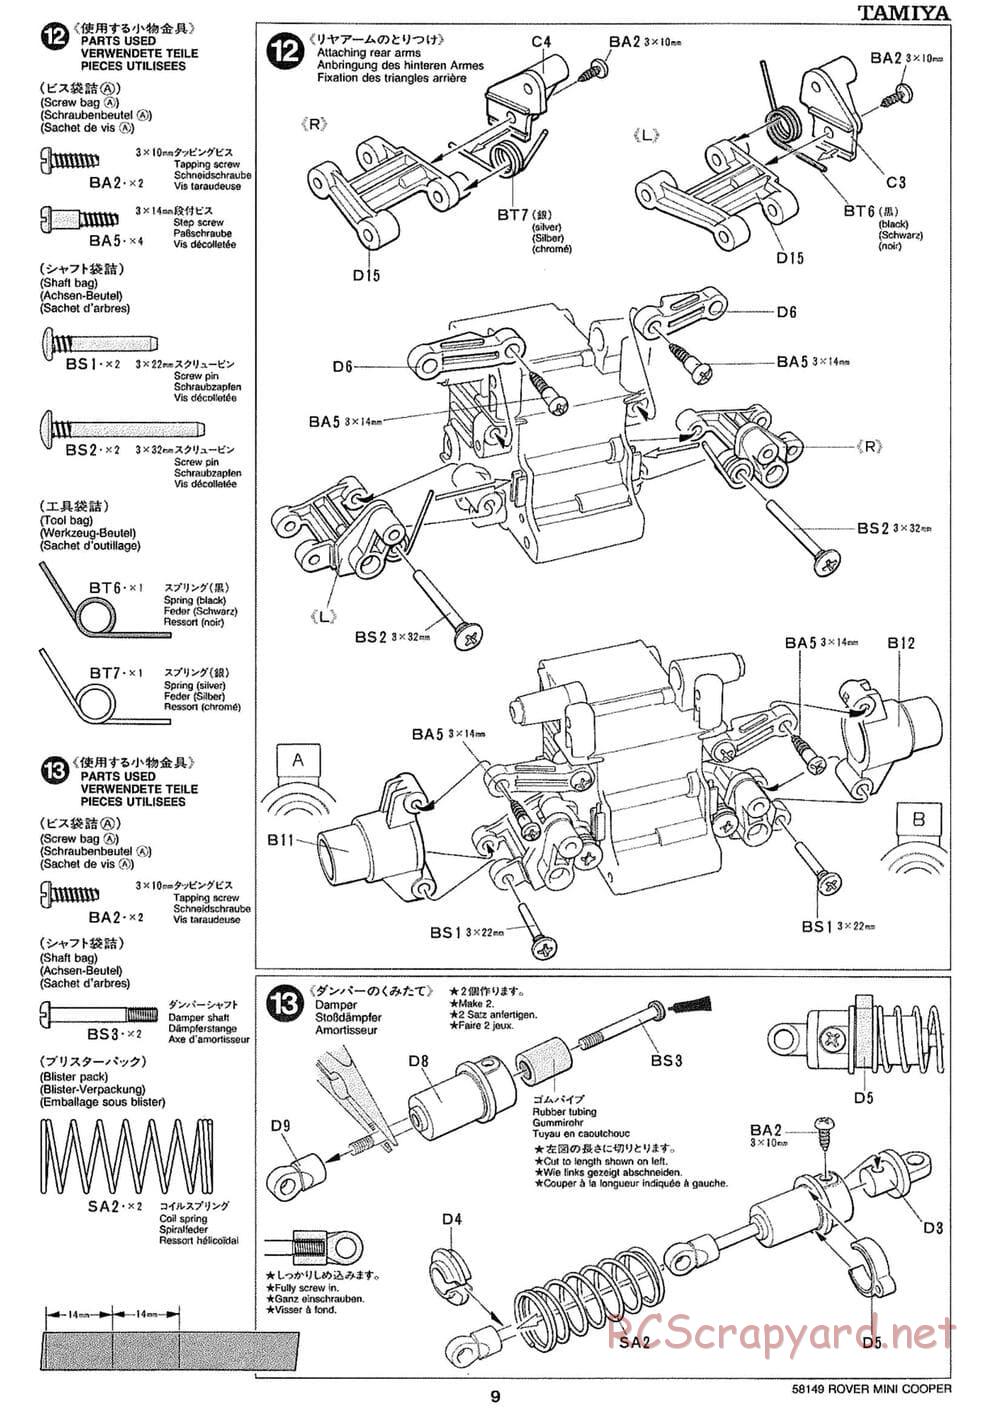 Tamiya - Rover Mini Cooper - M01 Chassis - Manual - Page 9